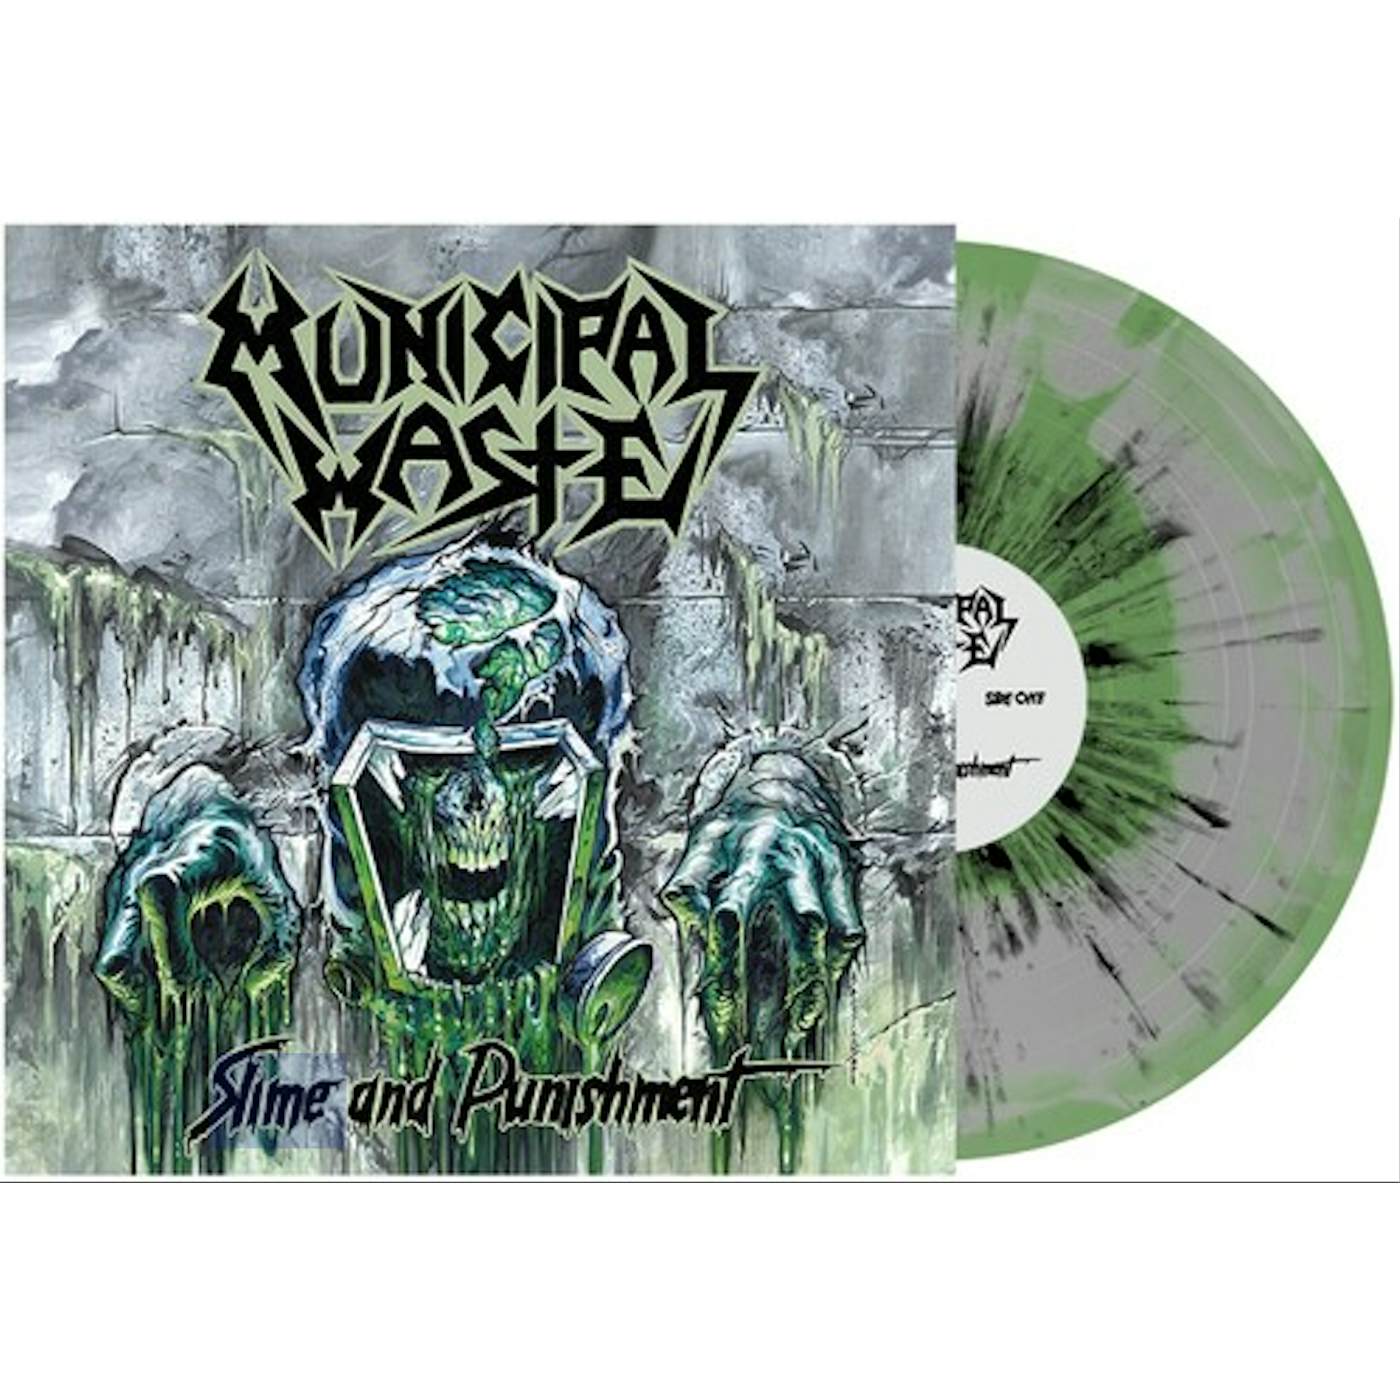 Municipal Waste "Slime and Punishment (Bottle Green)" 12" (Vinyl)